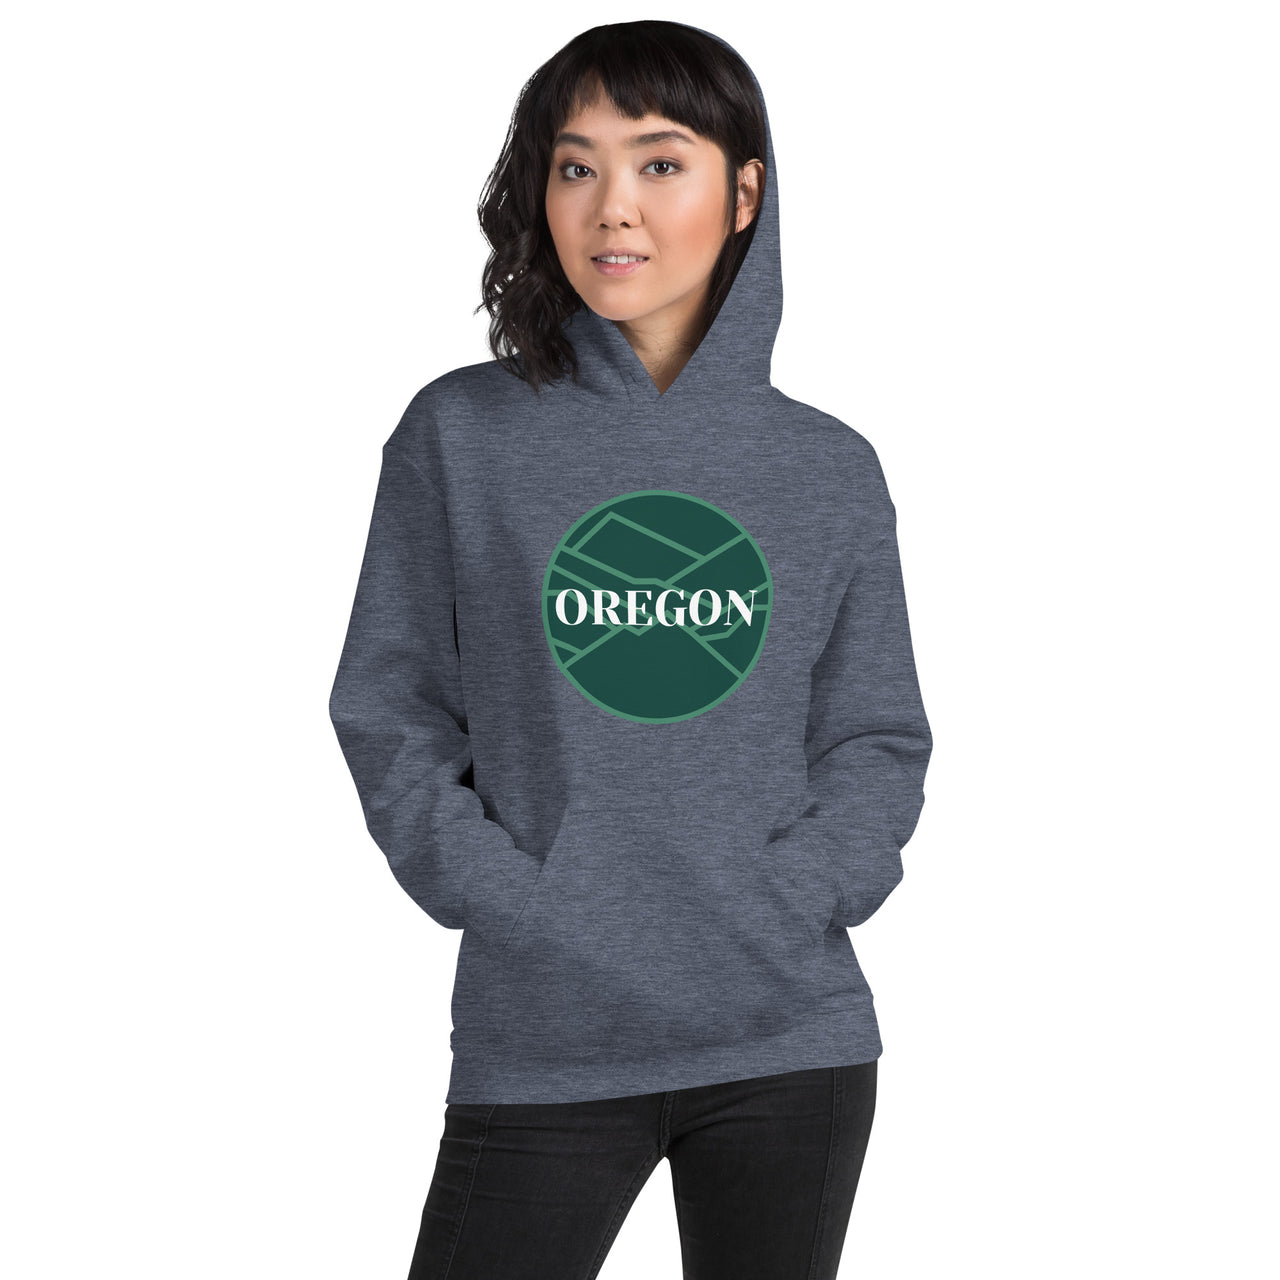 OREGON - Green - Unisex Hoodie